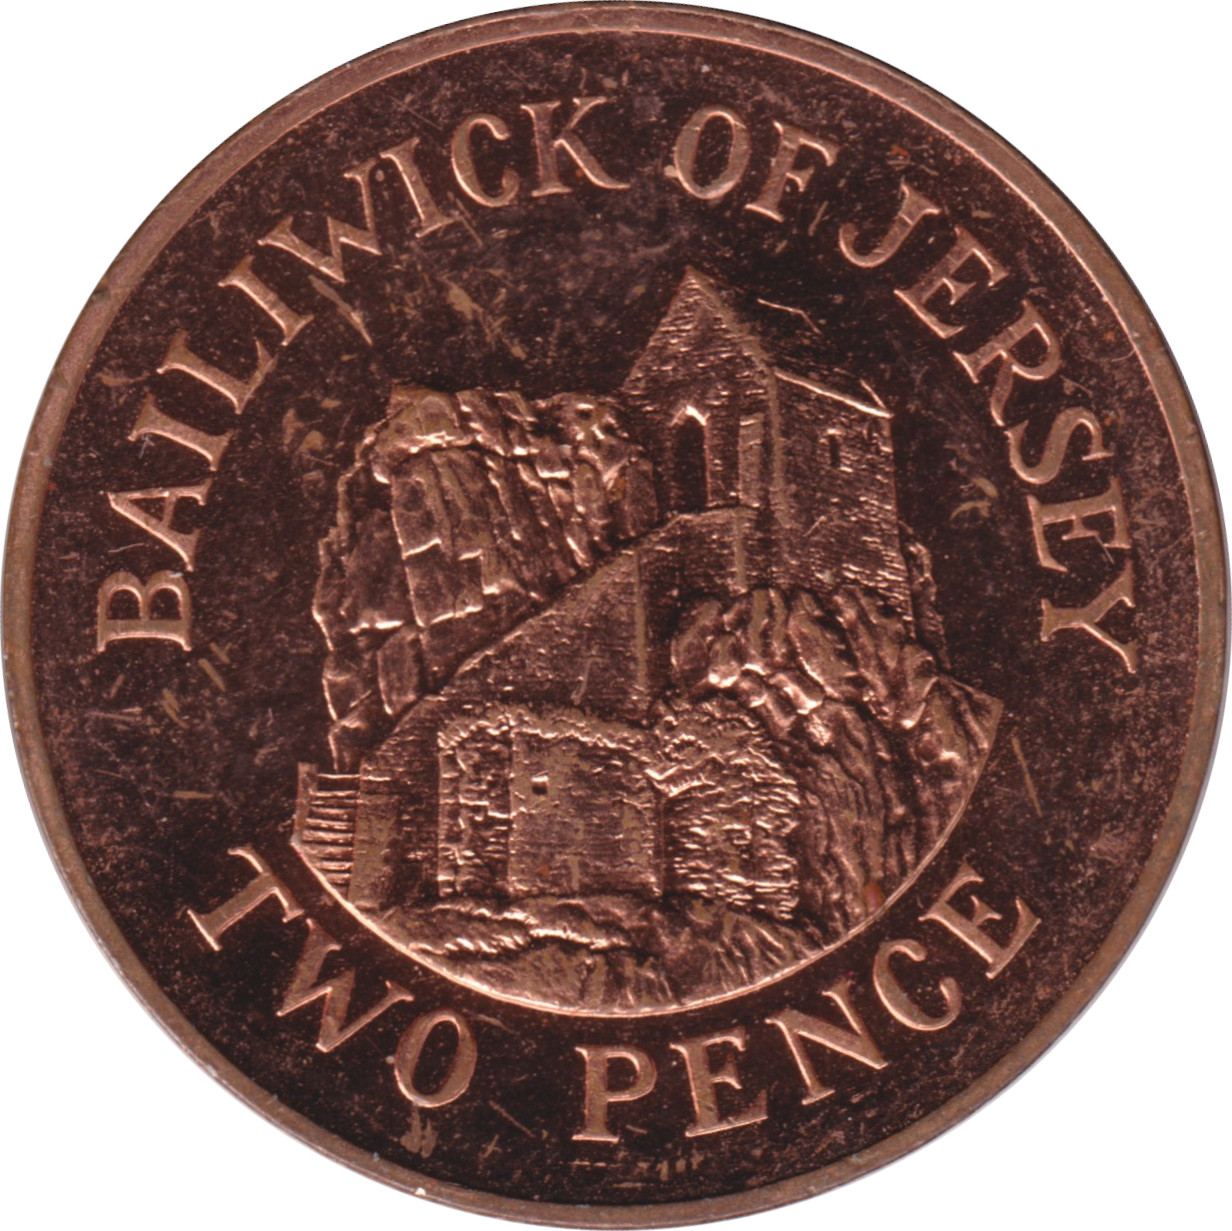 2 pence - Elizabeth II - Mature bust